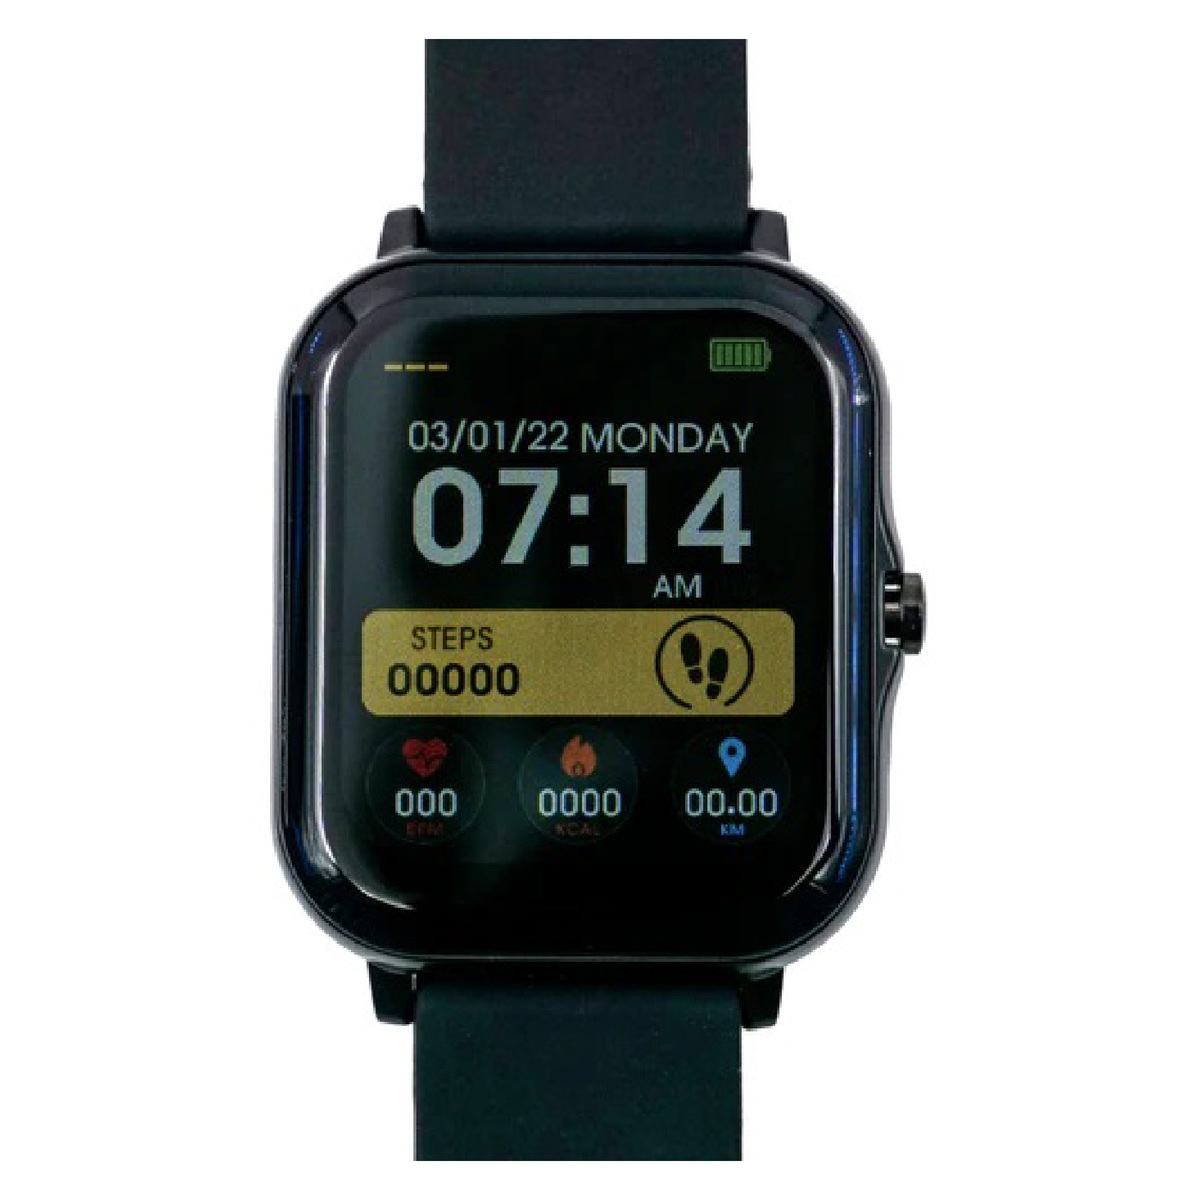 Touchmate Smartwatch TM-SW460P Black